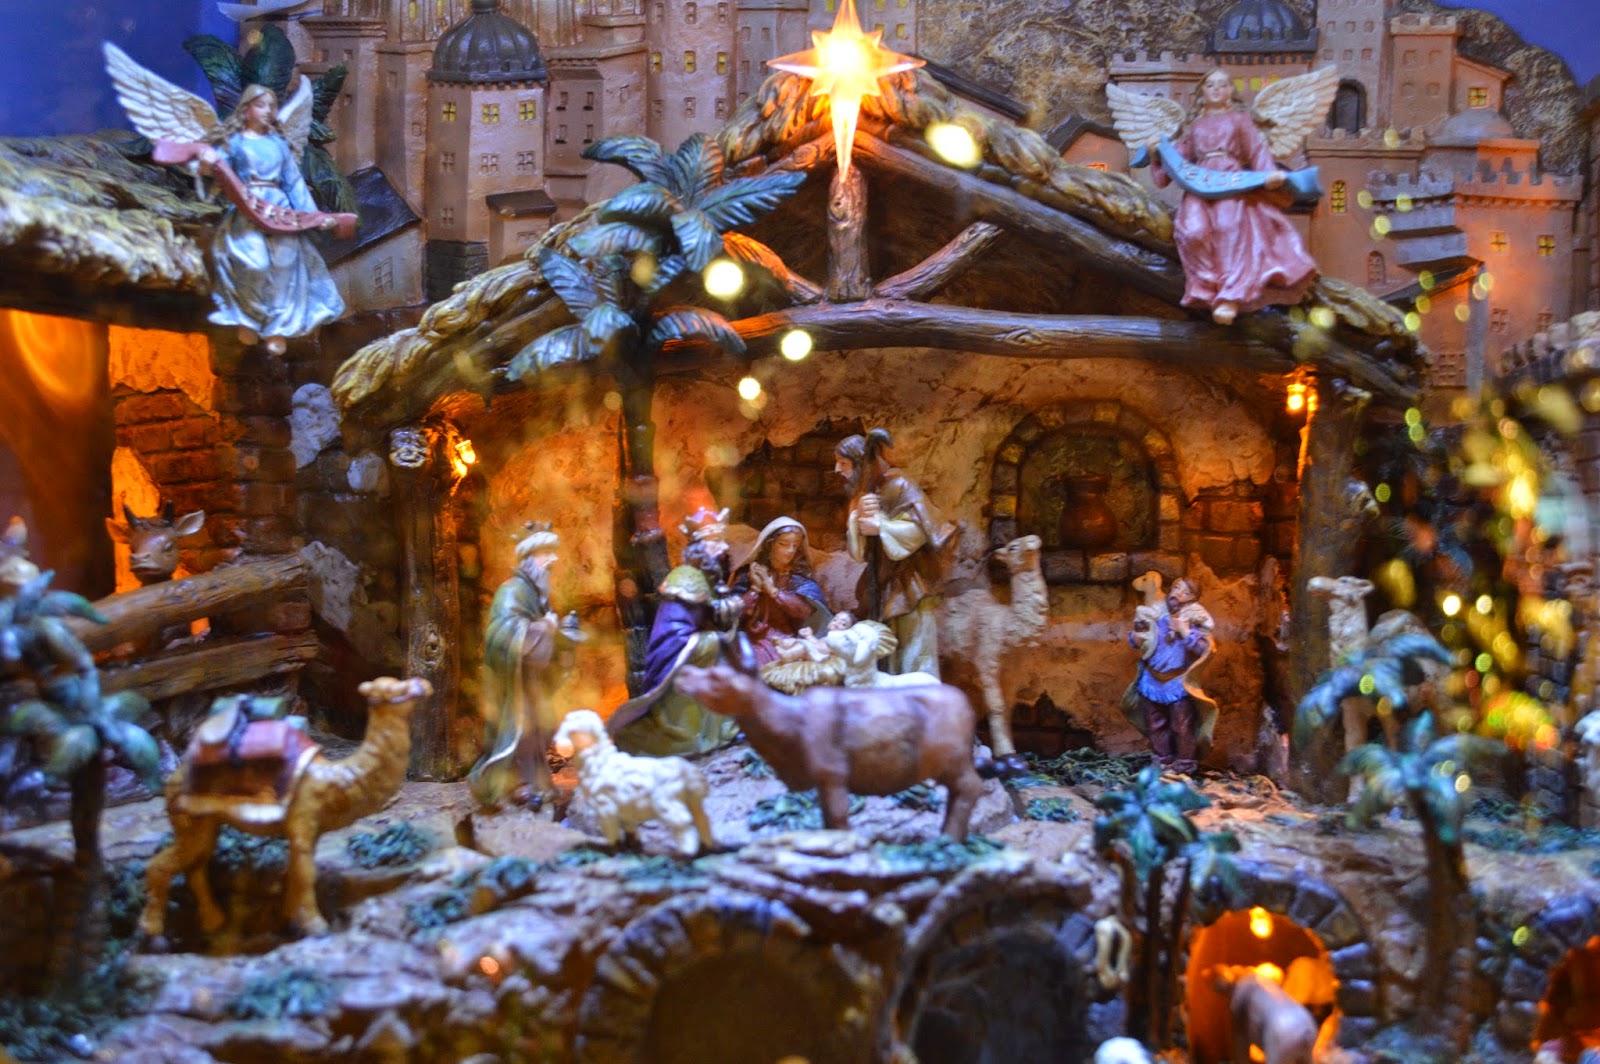 Nativity set from Kris Kringl